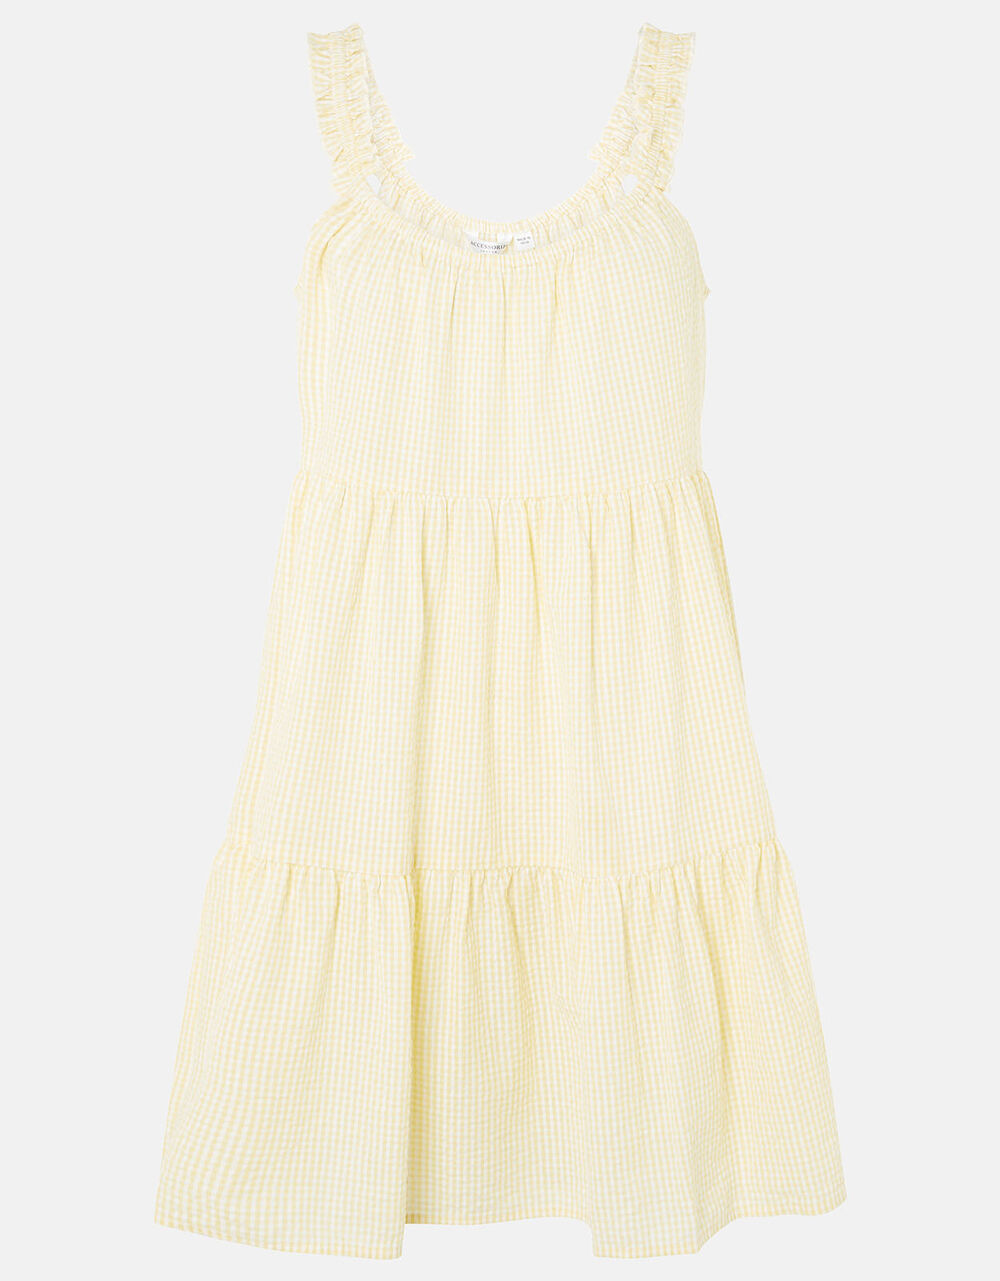 Gingham Mini Dress in Organic Cotton Yellow | Beach holiday dresses ...